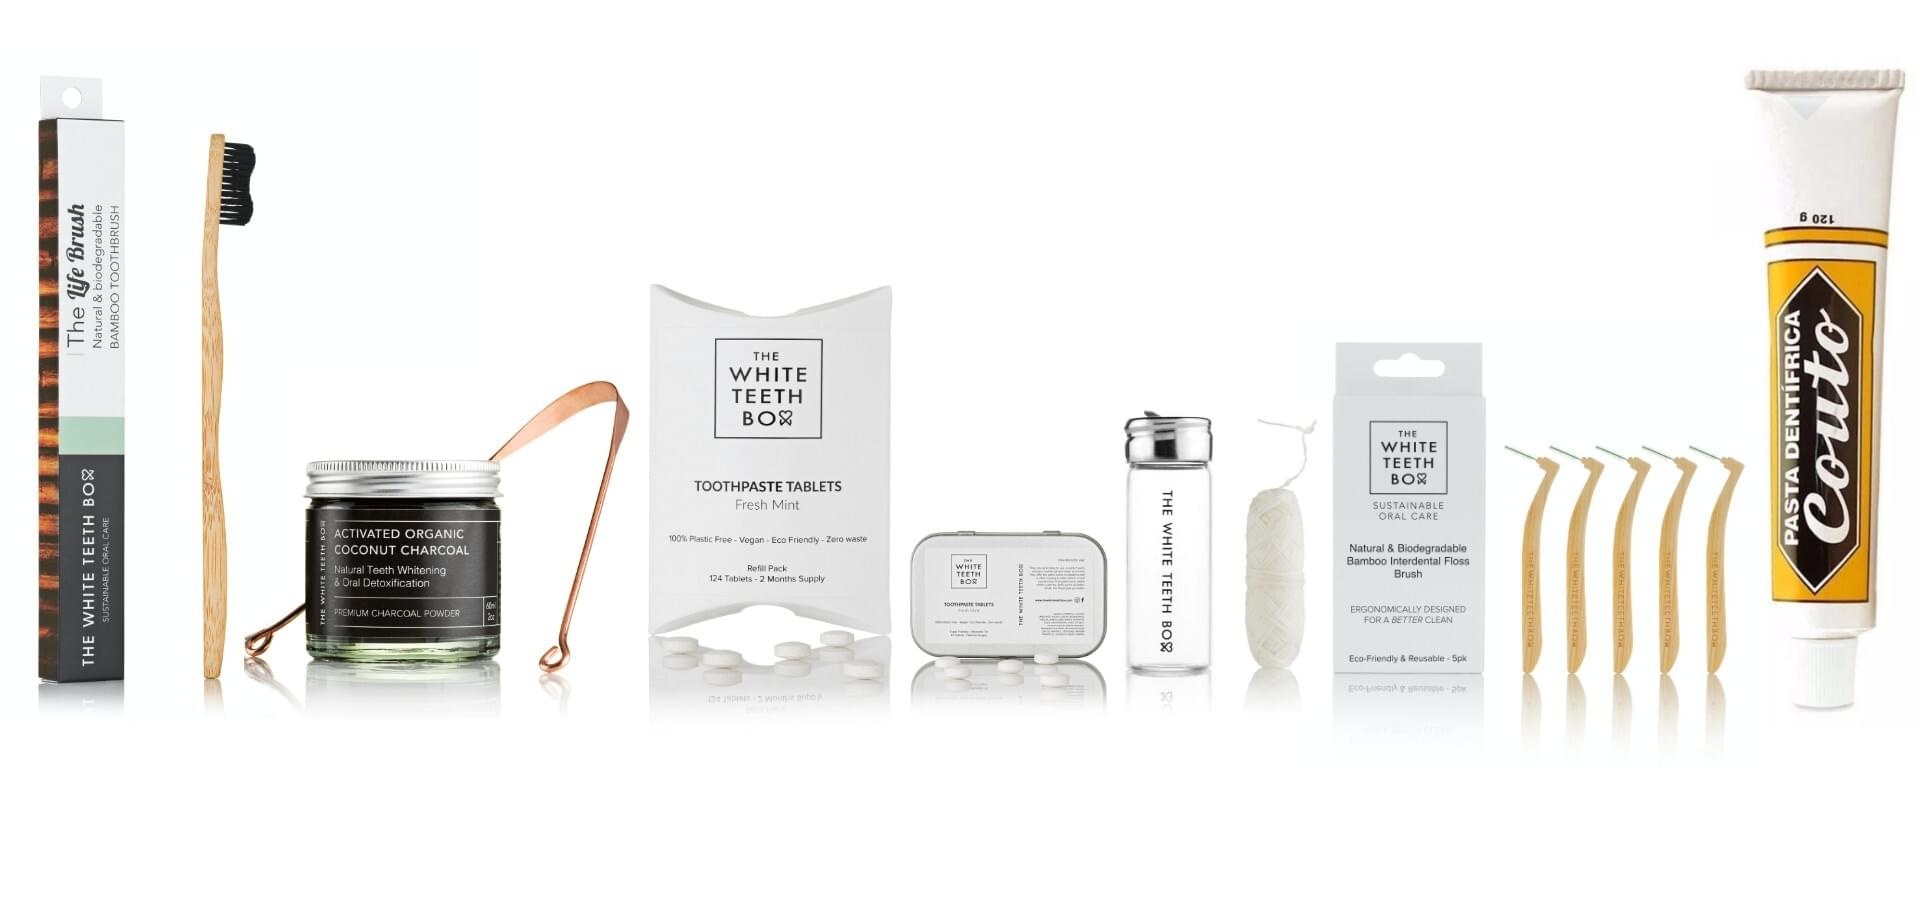 The White teeth box product range